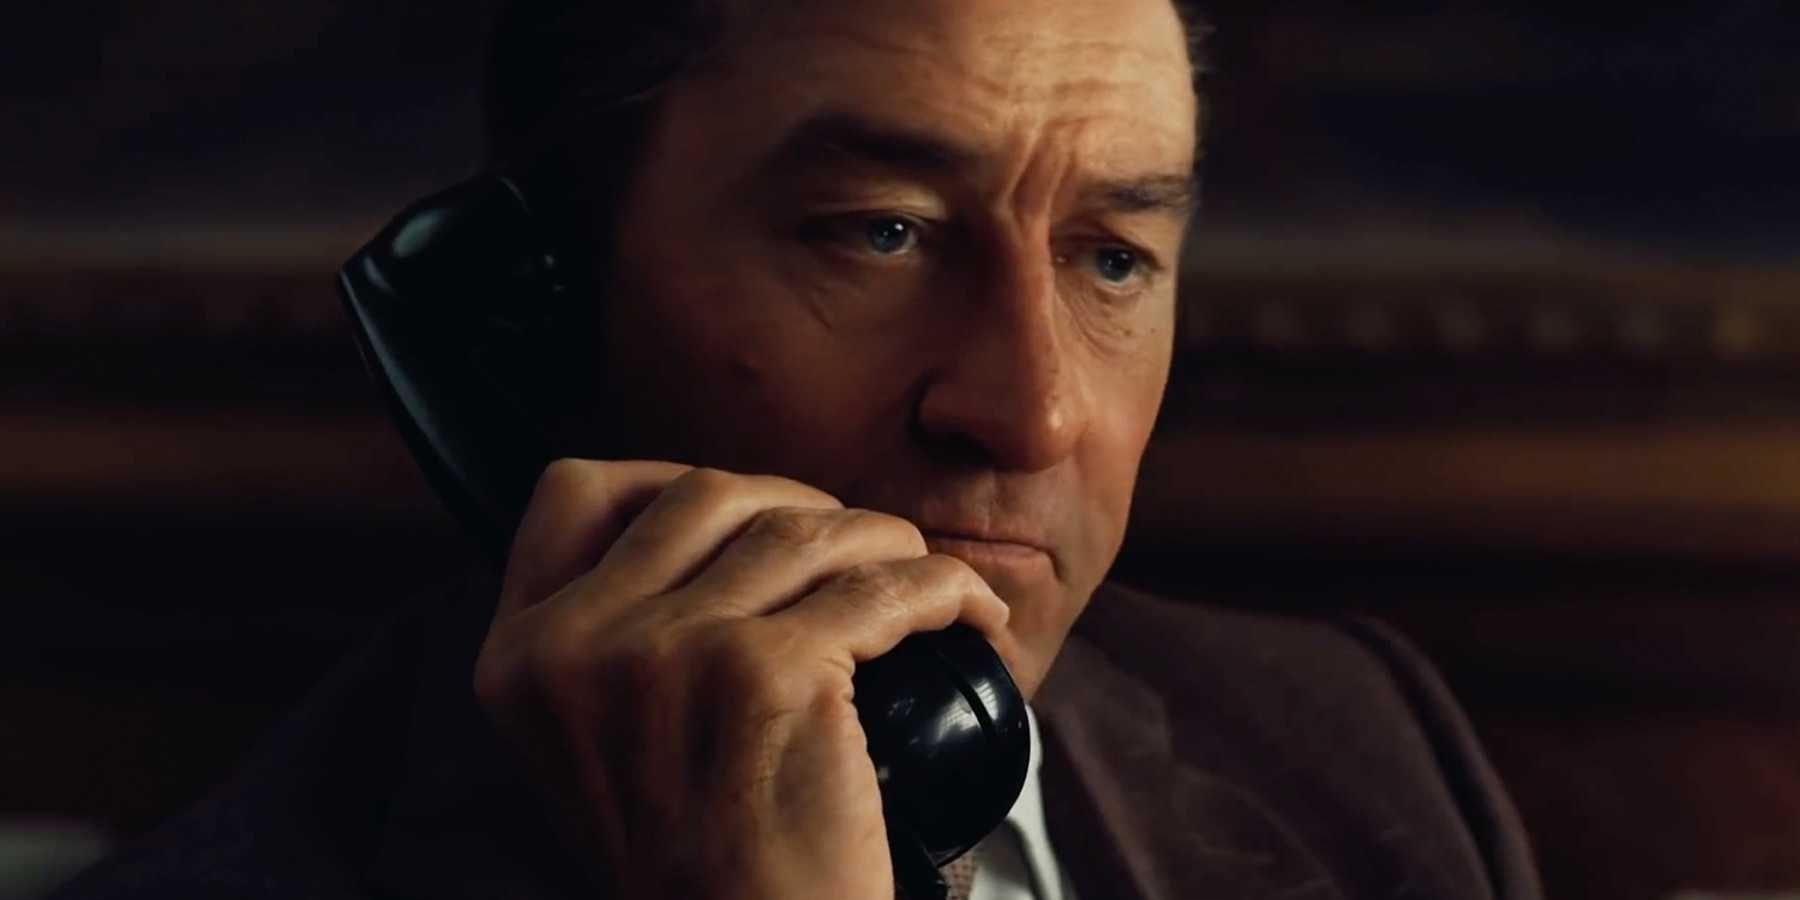 De-aged Robert De Niro on the phone in The Irishman